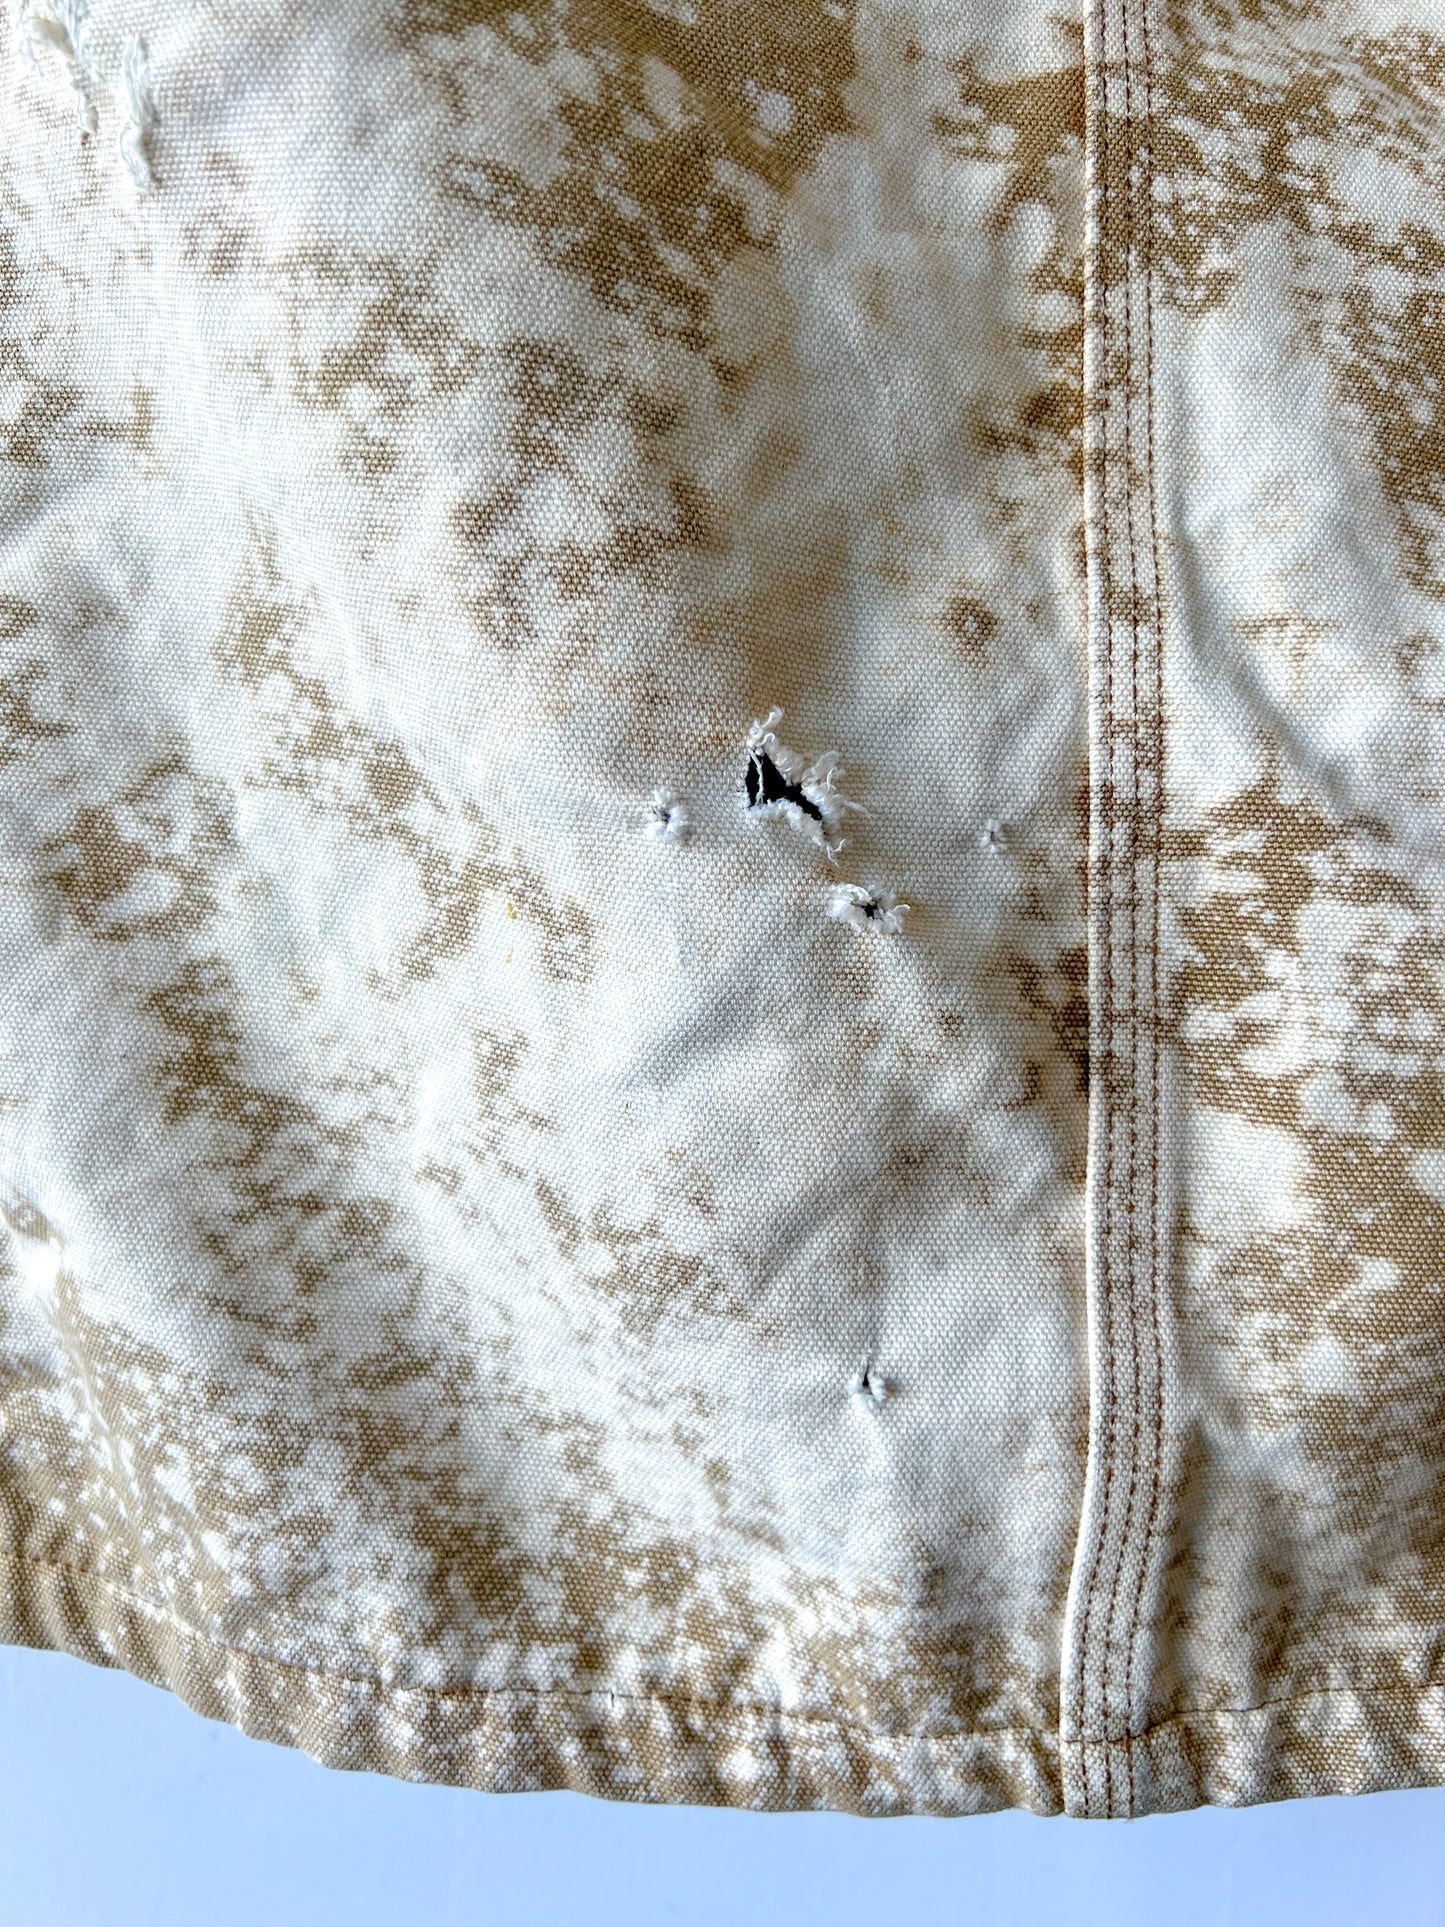 LANSING #2 - Vintage 90s Carhartt Acid Washed Blanket Lined Chore Coat - Tan, Beige - Unisex Small/Medium